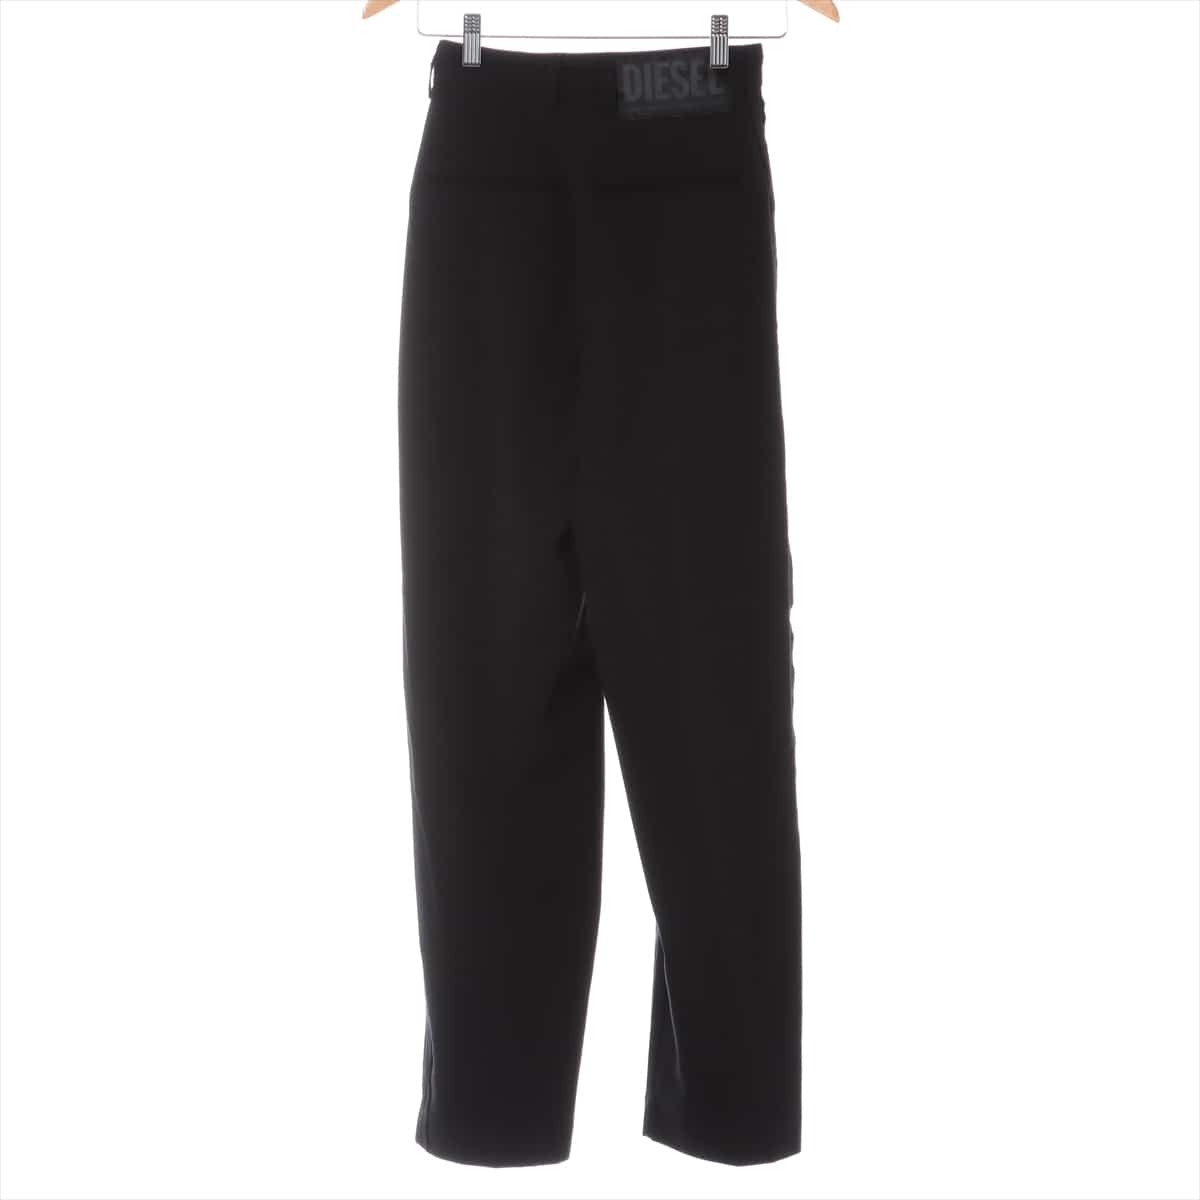 DIESEL Wool & polyester Pants 23 Men's Black  slitting